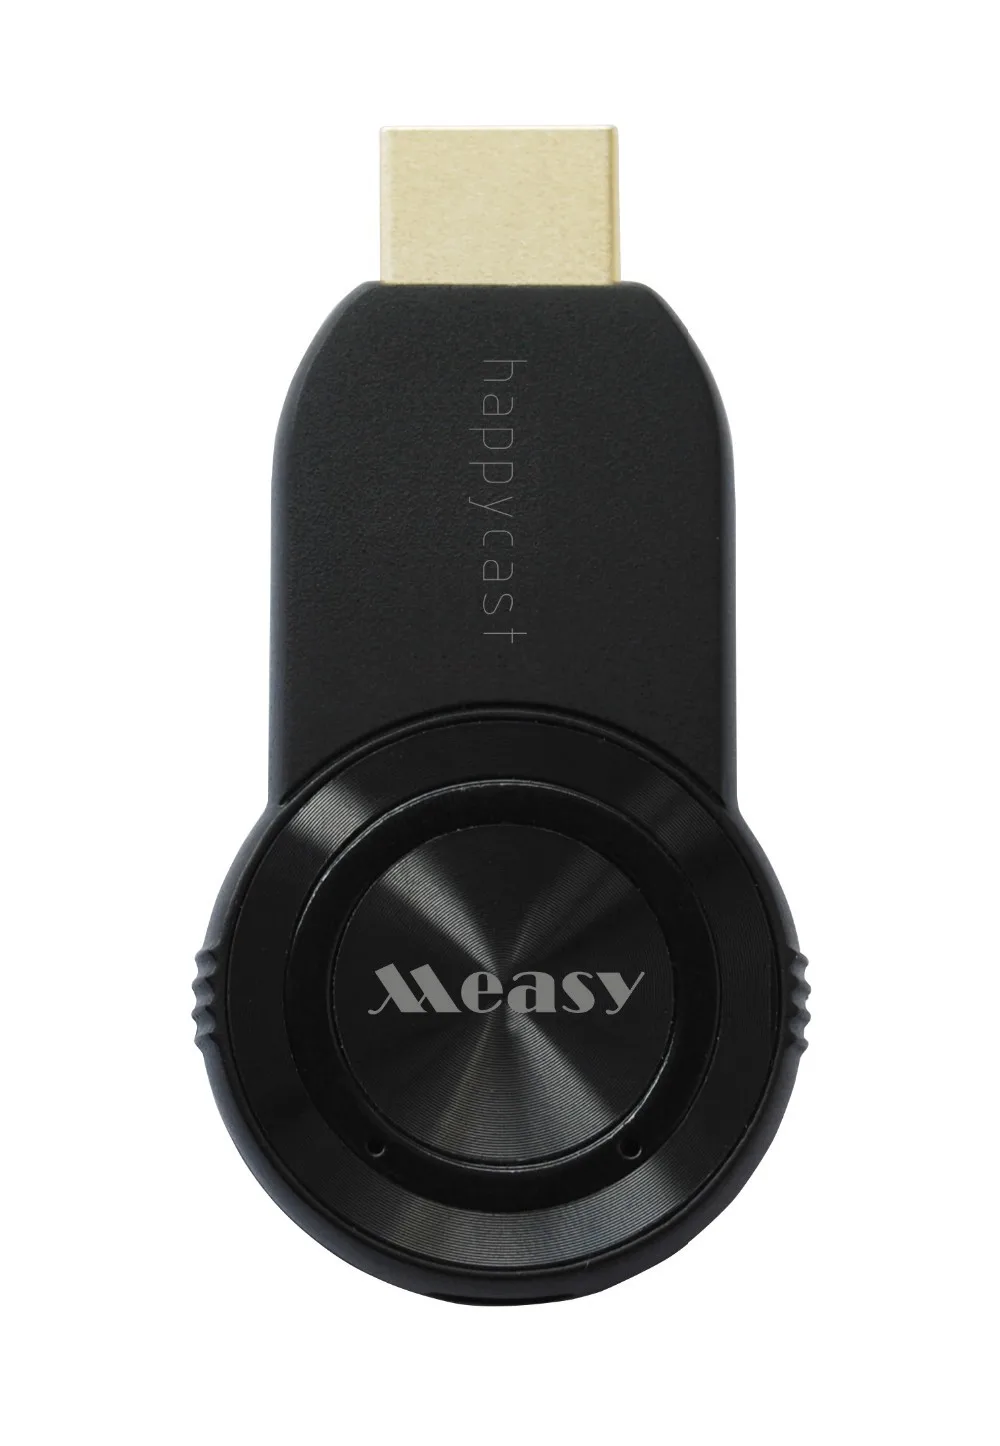 Measy A3C II happycast HDMI WiFi Дисплей Airplay DLNA Miracast Dongle TV Stick приемник процессор AM8252 адаптер для телефона Android IOS